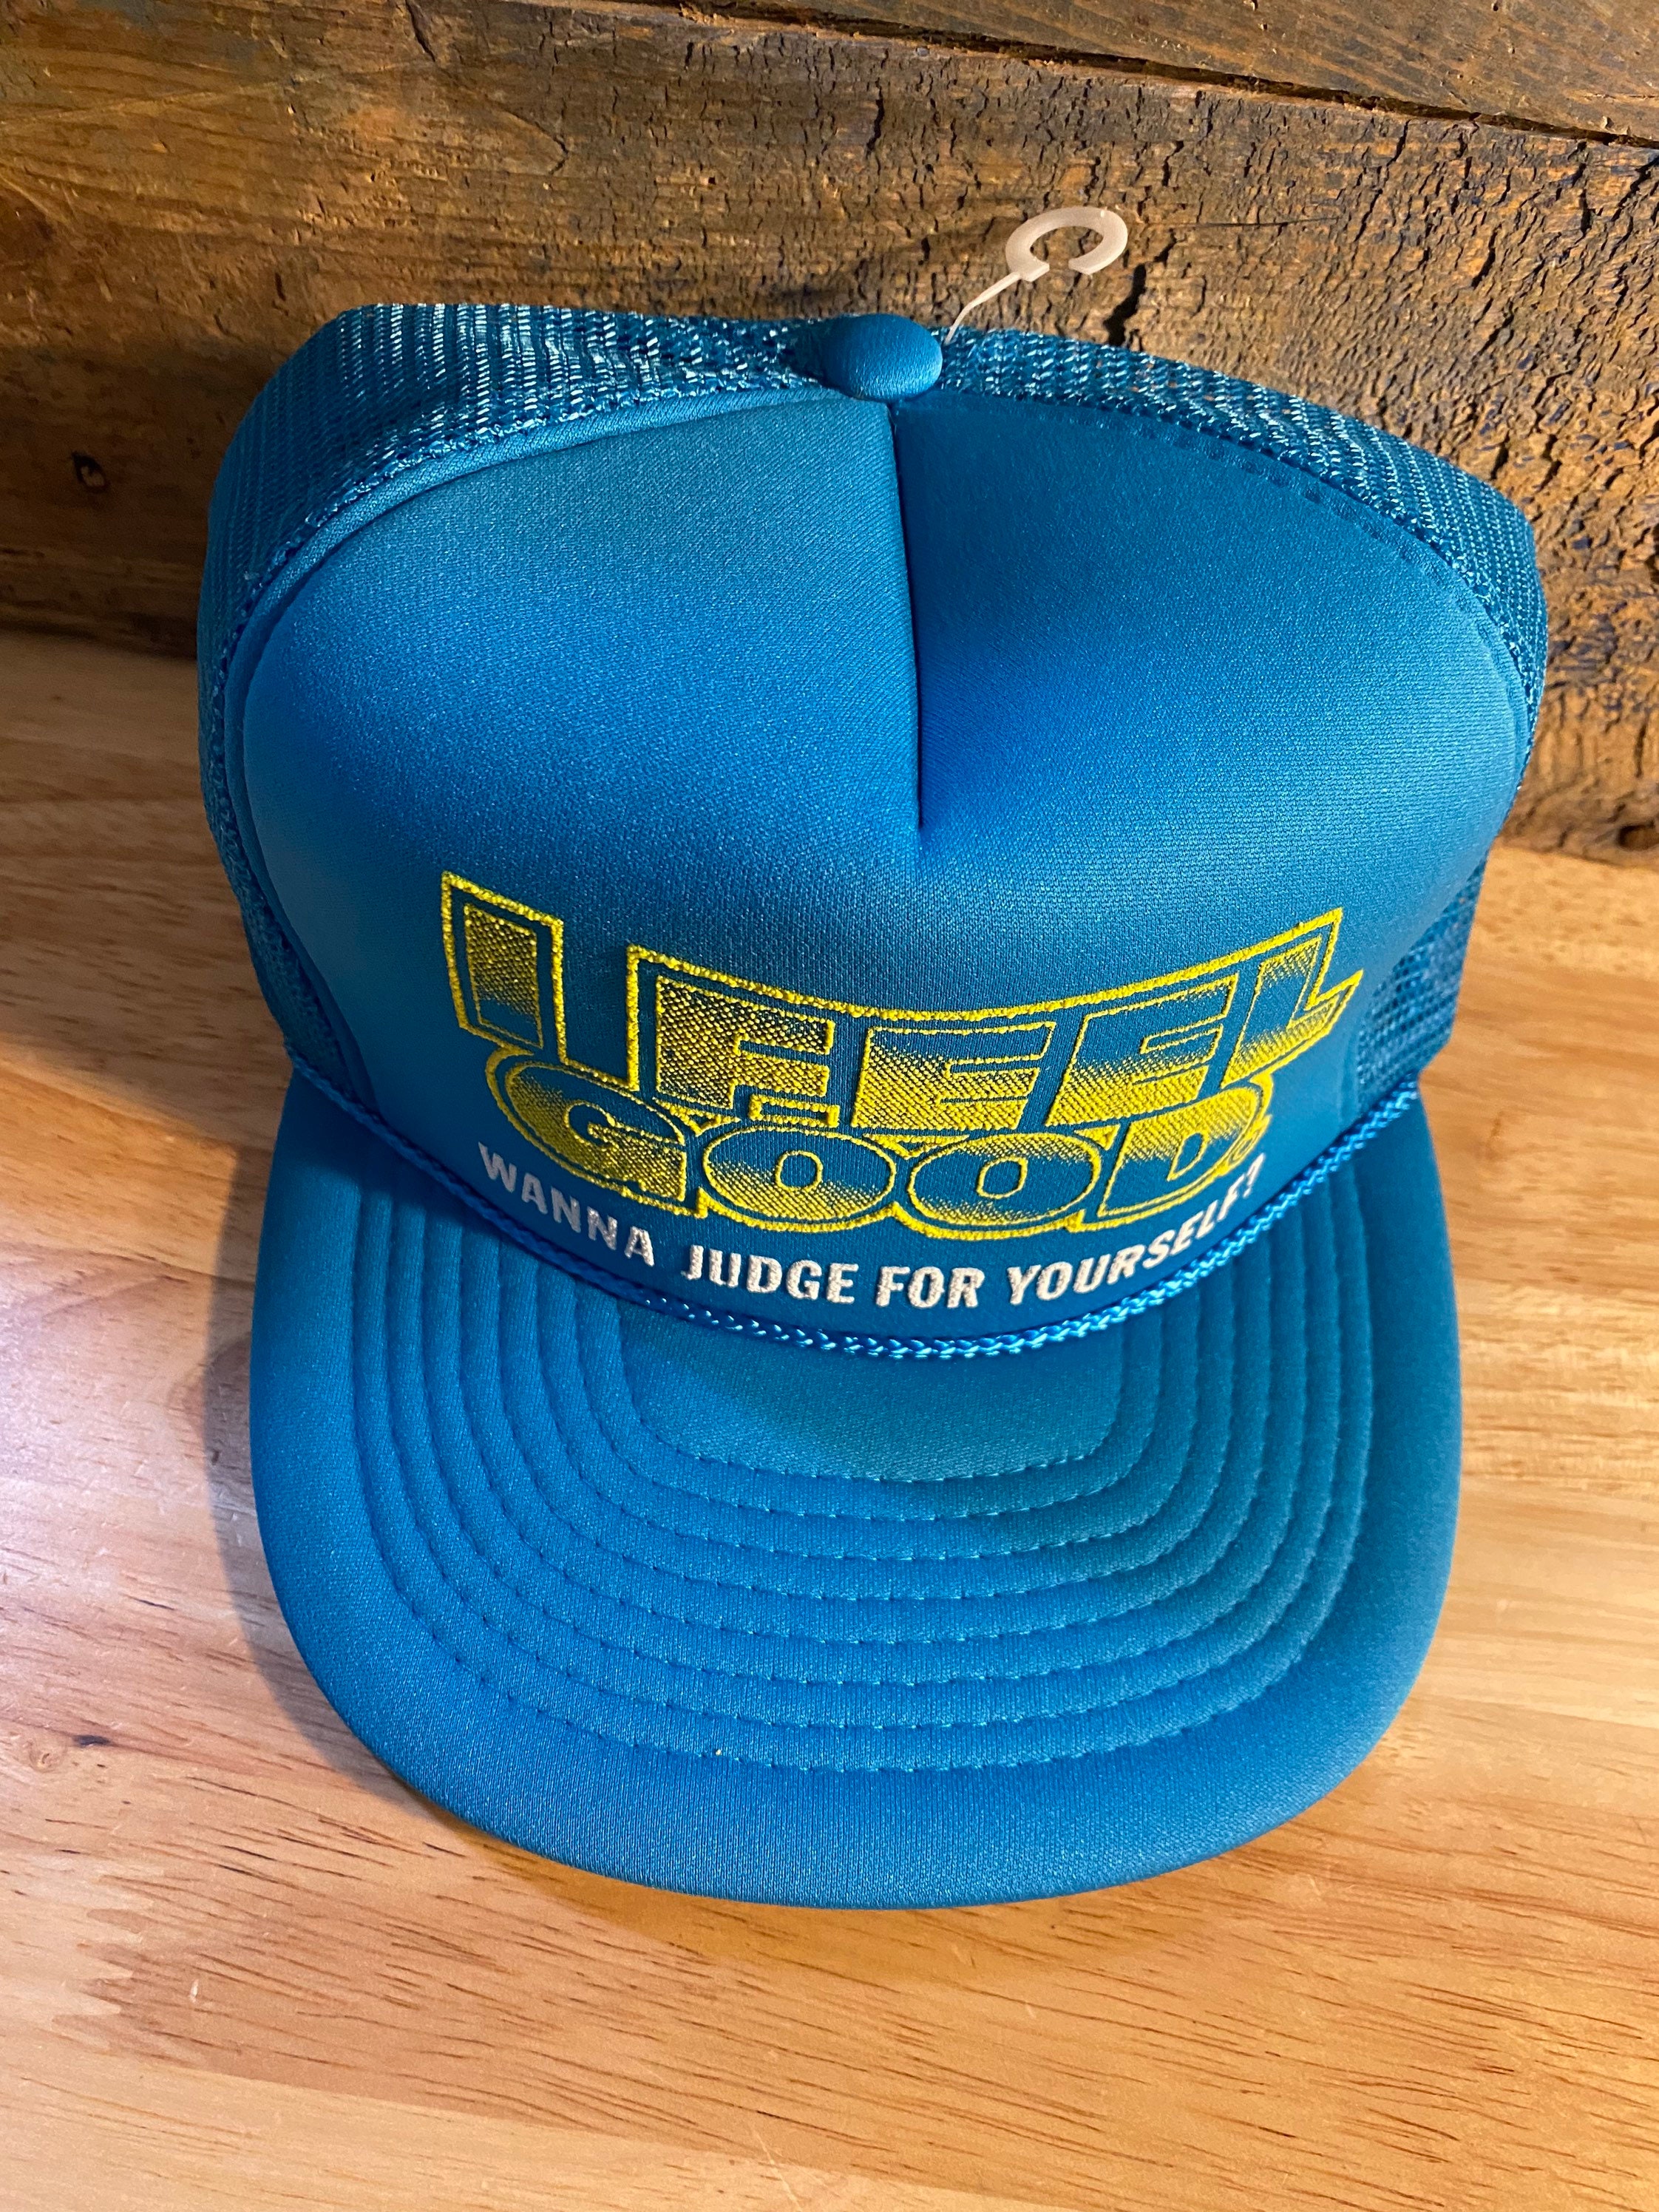 Vintage funny trucker hat // I feel good wanna judge for | Etsy